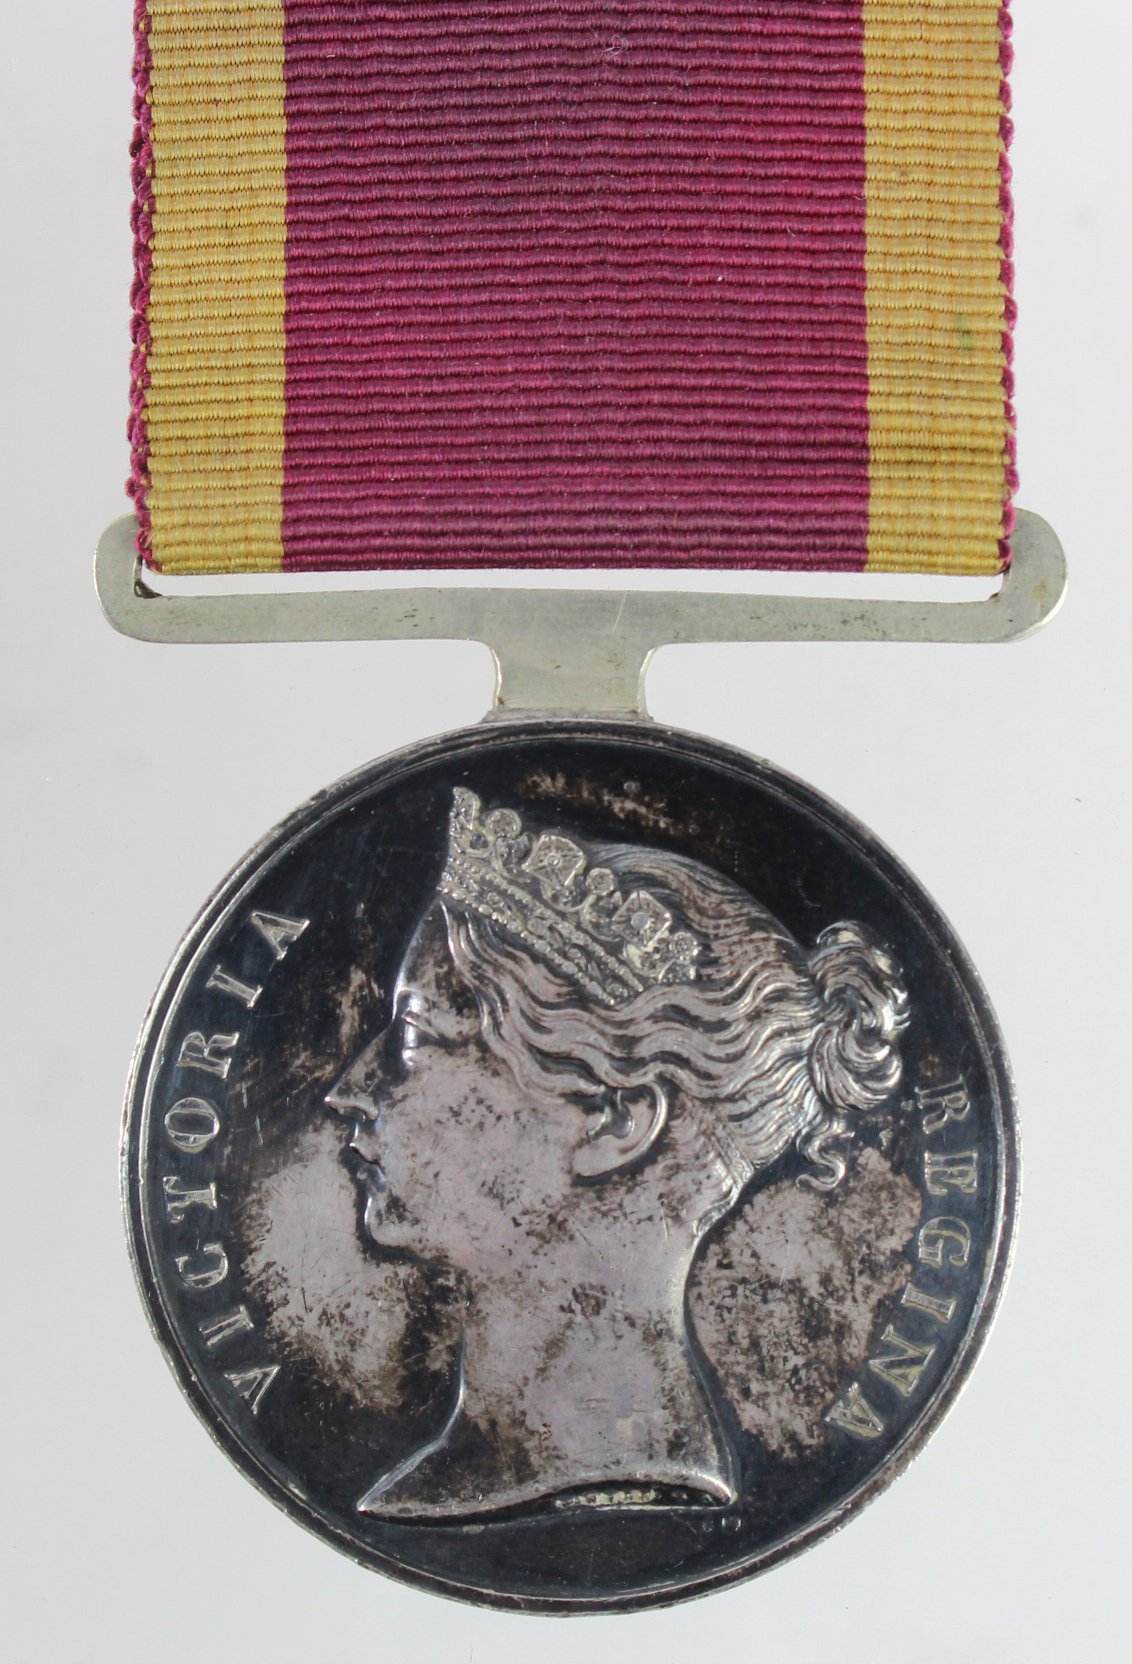 China War Medal 1842, First Opium War, impressed (William Deale HMS Alligator).